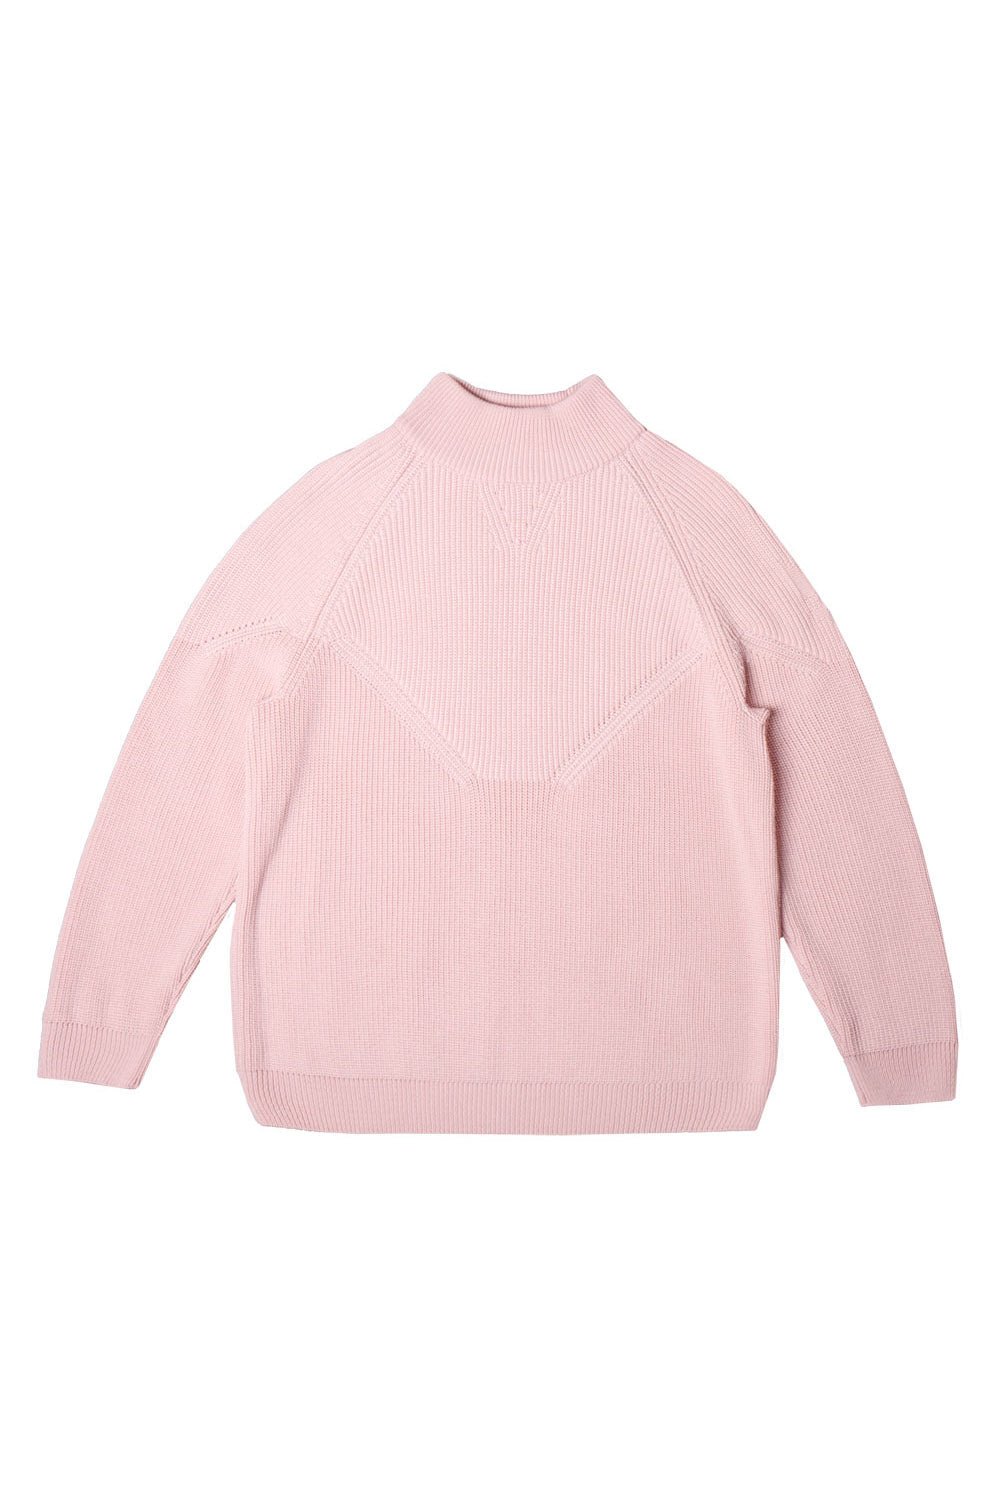 Timberjack Sweater, Women Outlet - VAI-KOshirts